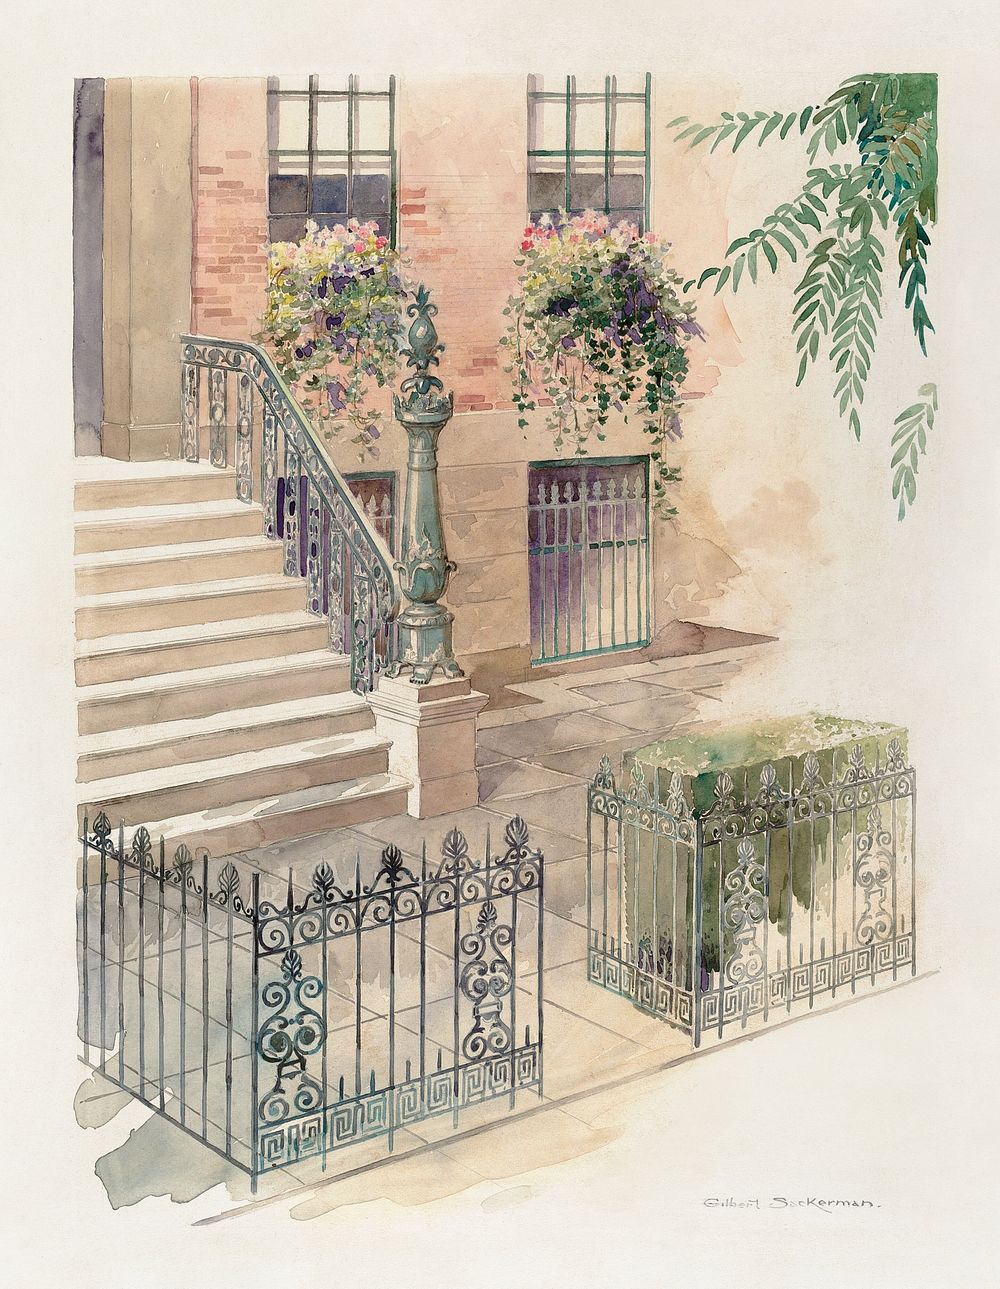 Balcony (1935&ndash;1942) by Gilbert Sackerman. Digitally enhanced by rawpixel.